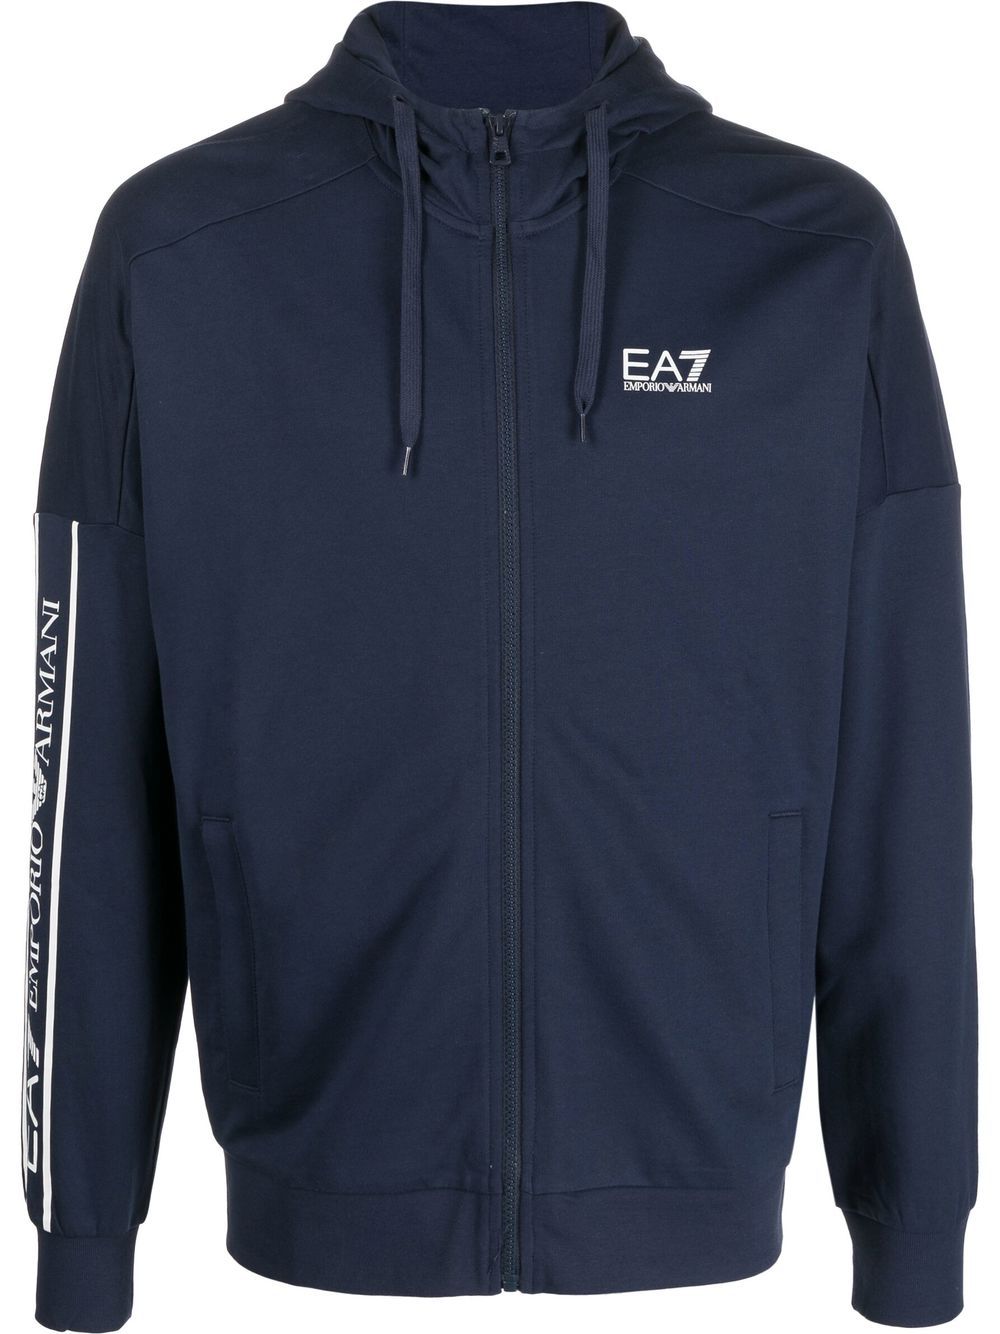 Ea7 Emporio Armani logo-print Cotton Hoodie - Farfetch